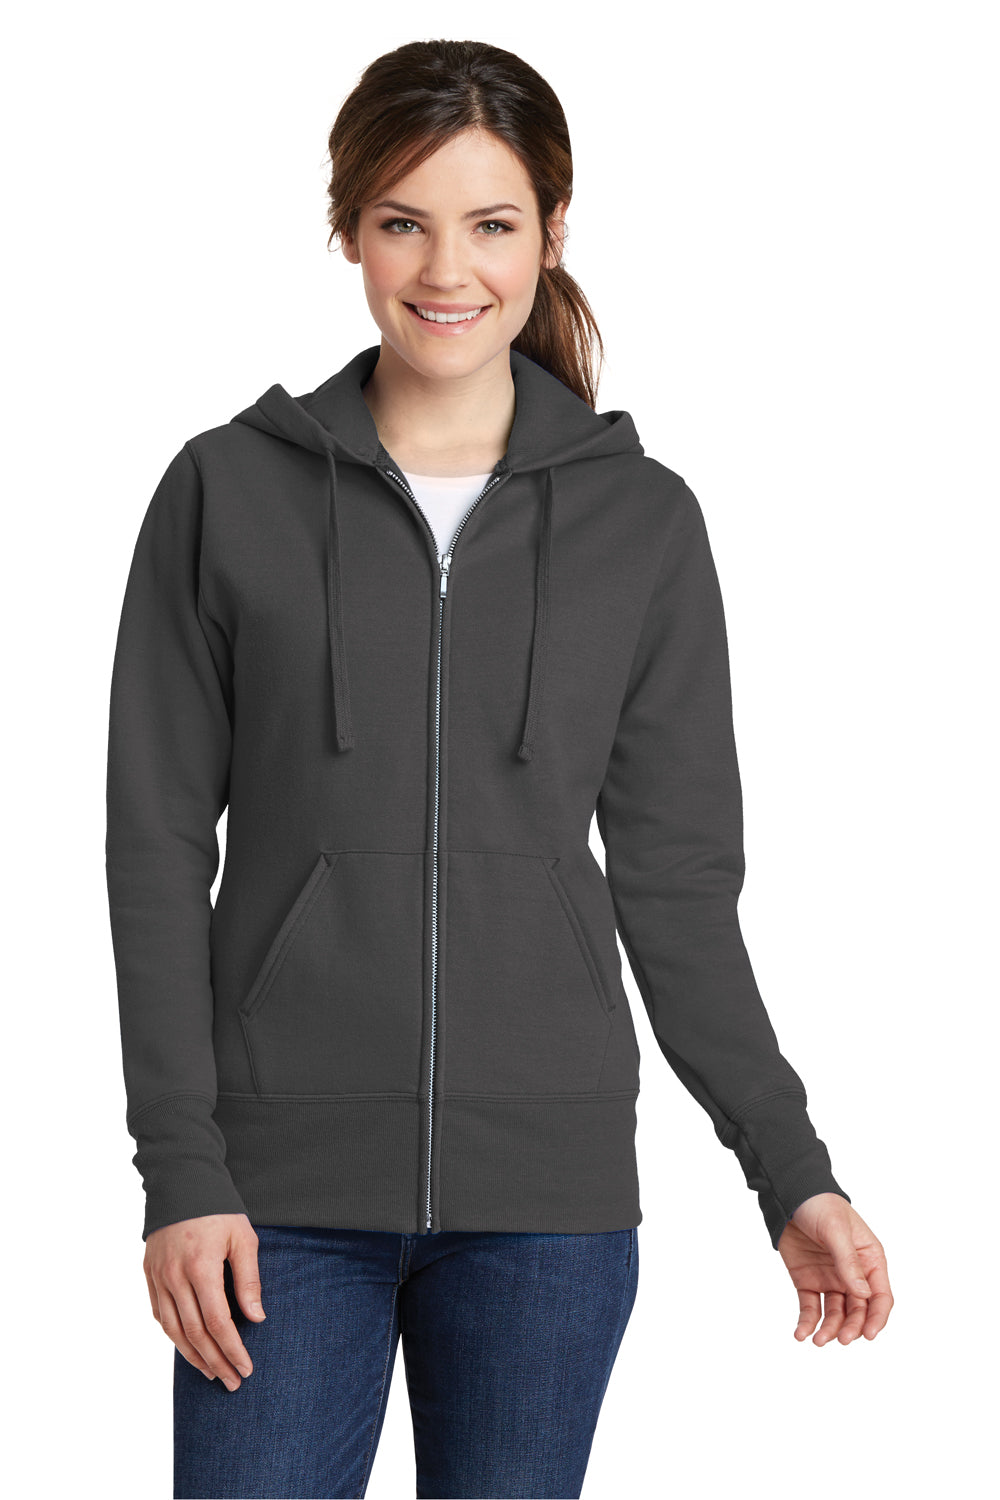 Port & Company LPC78ZH Womens Core Fleece Full Zip Hooded Sweatshirt Hoodie Charcoal Grey Front